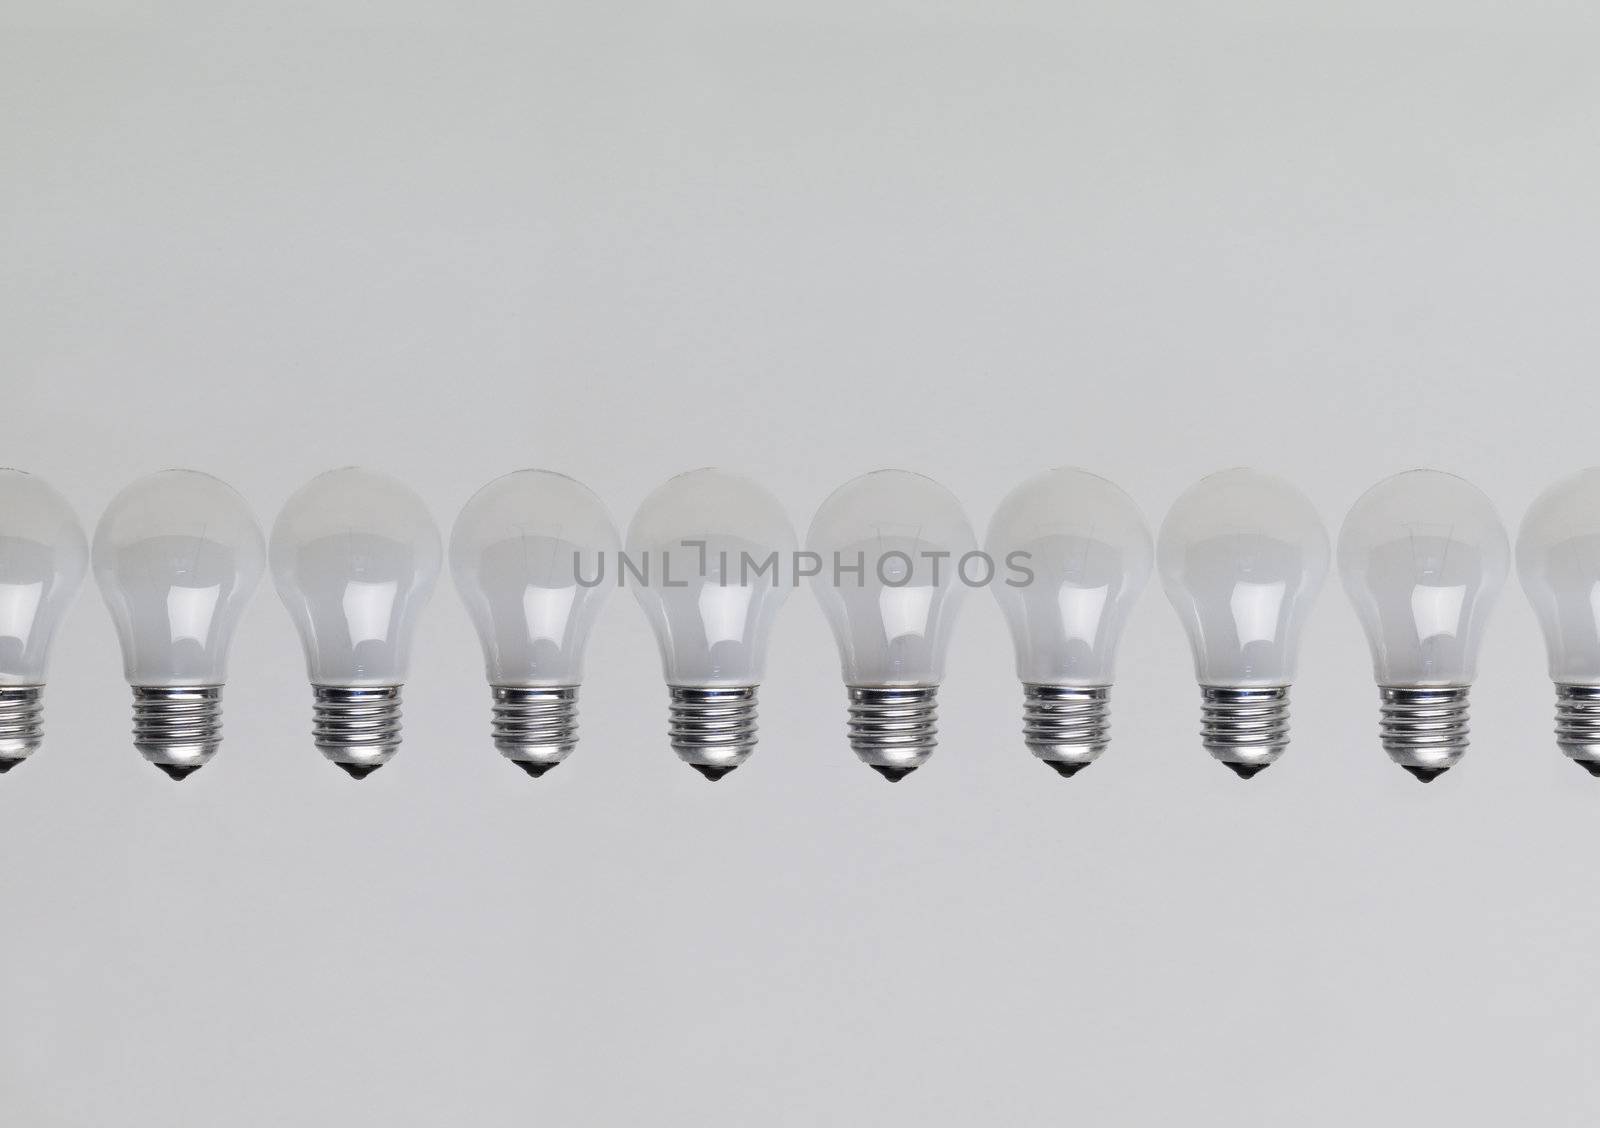 Row of light bulbs by gemenacom